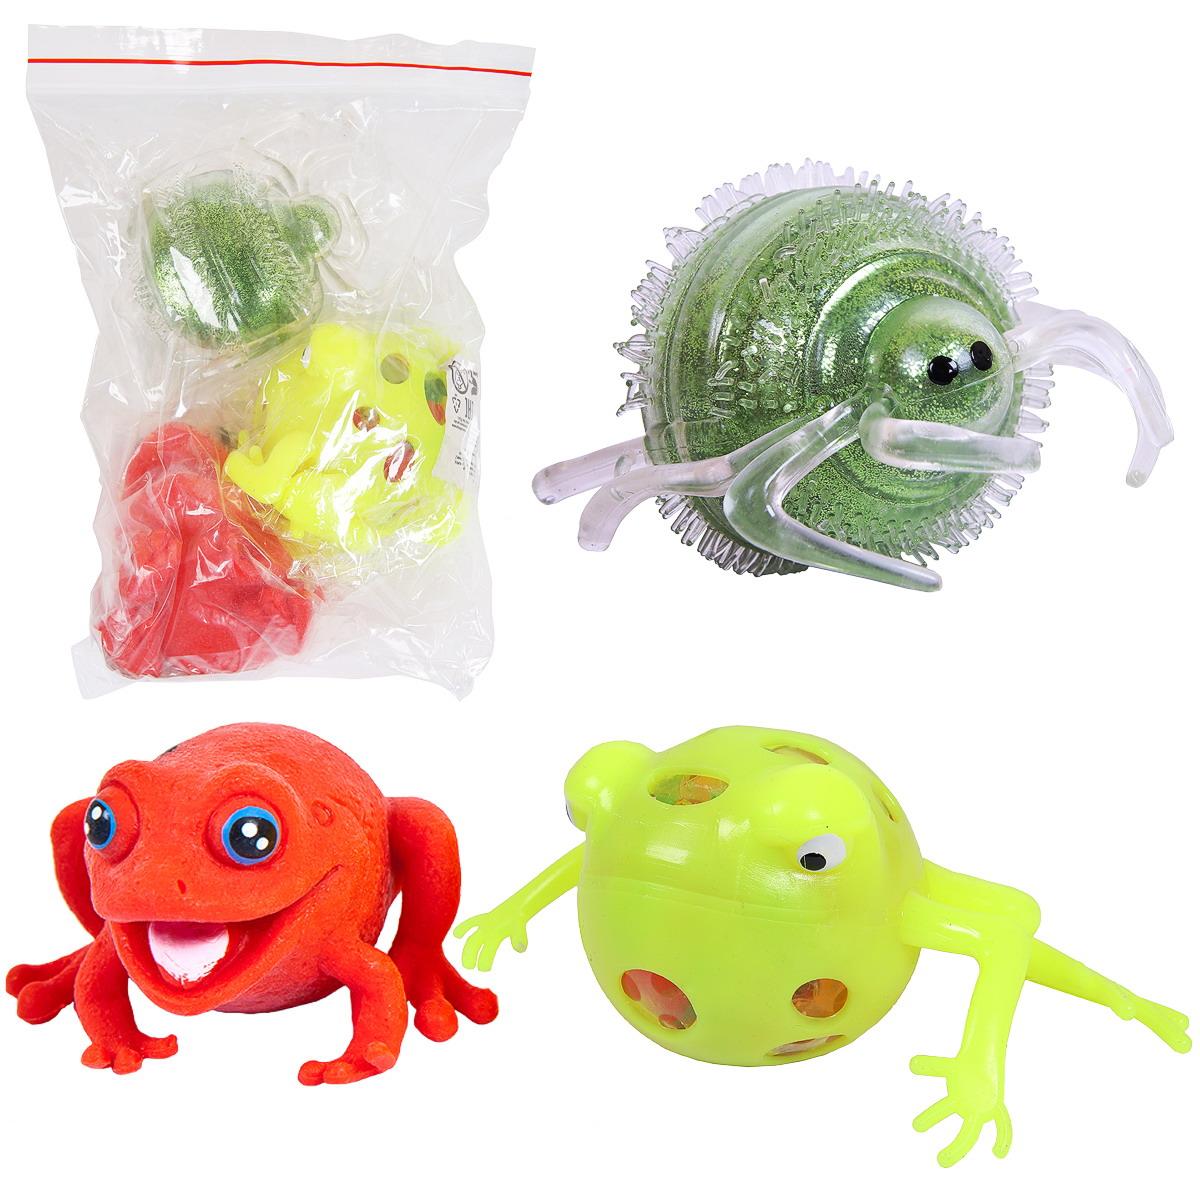 Игрушка антистресс - тянучки: лягушка со световыми эффектами, паук блестящий, лягушка, набор нSQ006